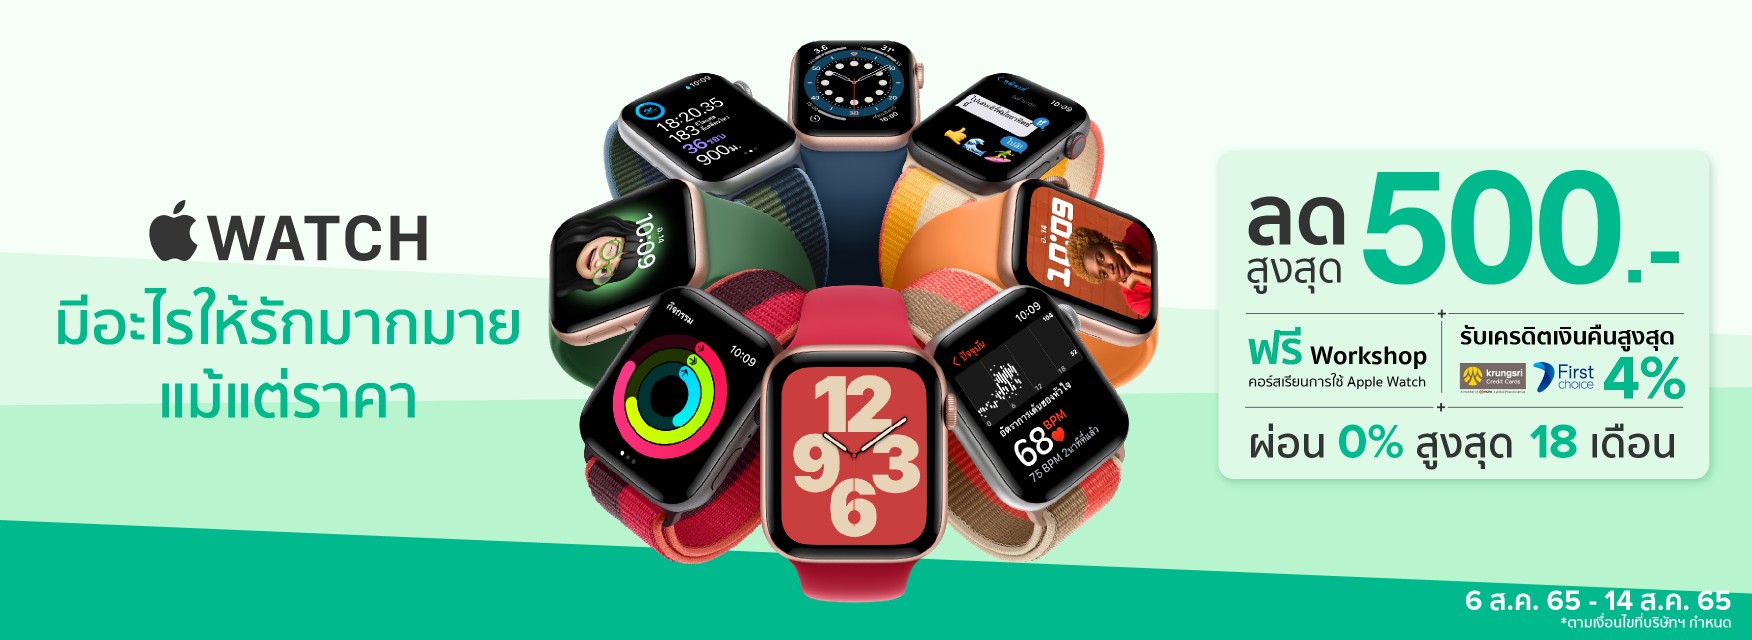 Apple Watch เวลานี้ ราคาดีที่สุด